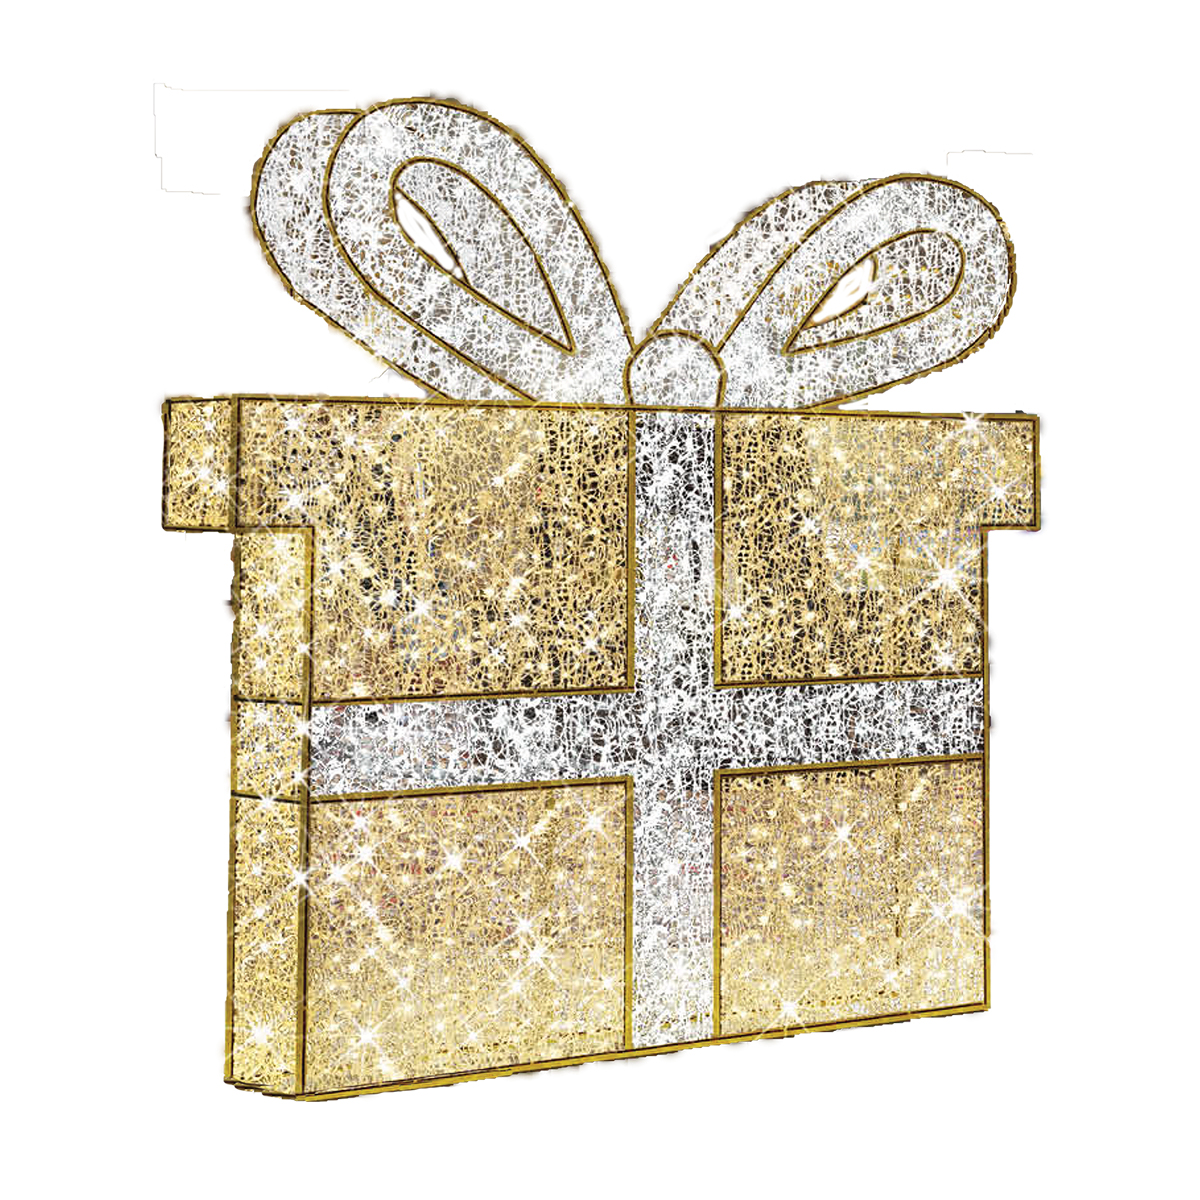 3D Gift Box - Christmas Display - Gold/White - Warm White LEDs - Medium - 6.5ft tall